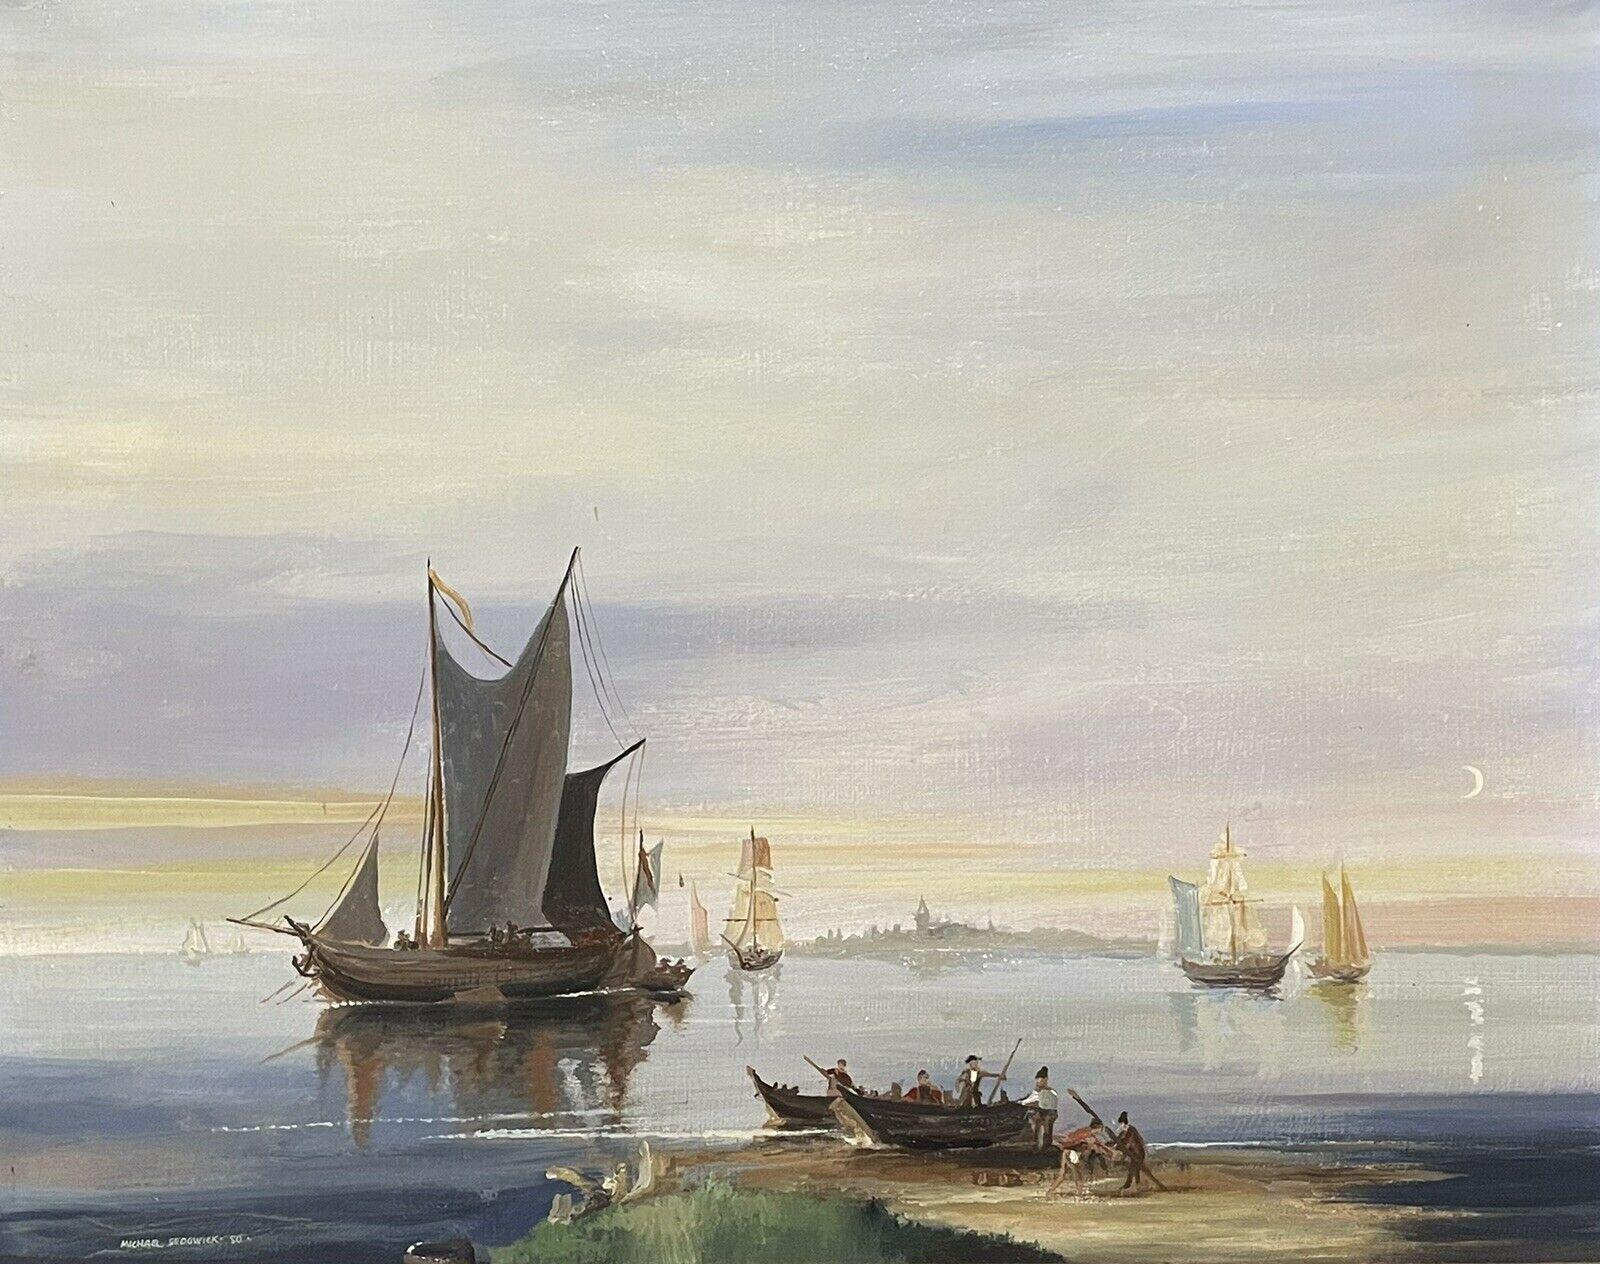 MICHAEL SEDGWICK PAINTING ORIGINAL SIGNÉ - SHIPPING IN CALM COASTAL WATERS - Painting de Michael Sedgwick